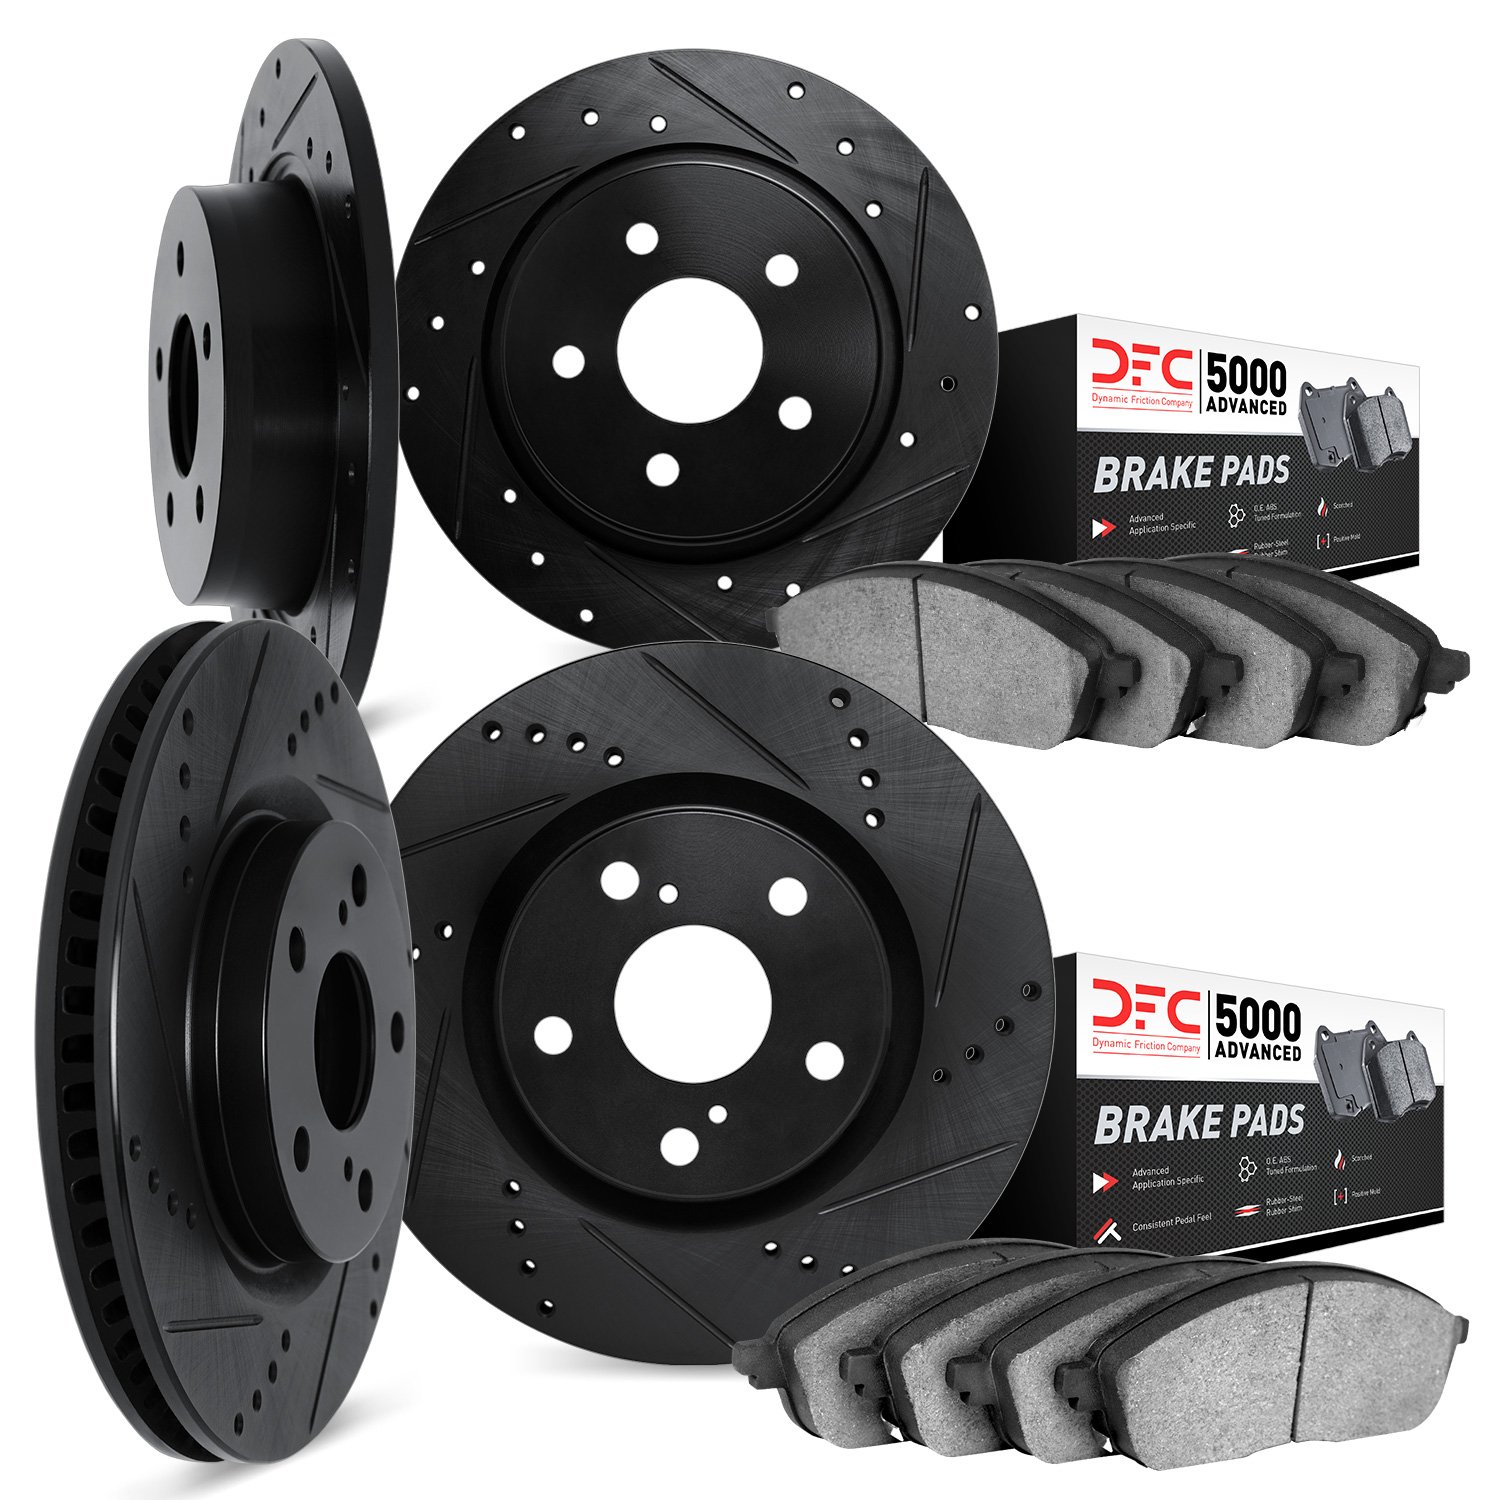 8504-40227 Drilled/Slotted Brake Rotors w/5000 Advanced Brake Pads Kit [Black], 2002-2006 Multiple Makes/Models, Position: Front